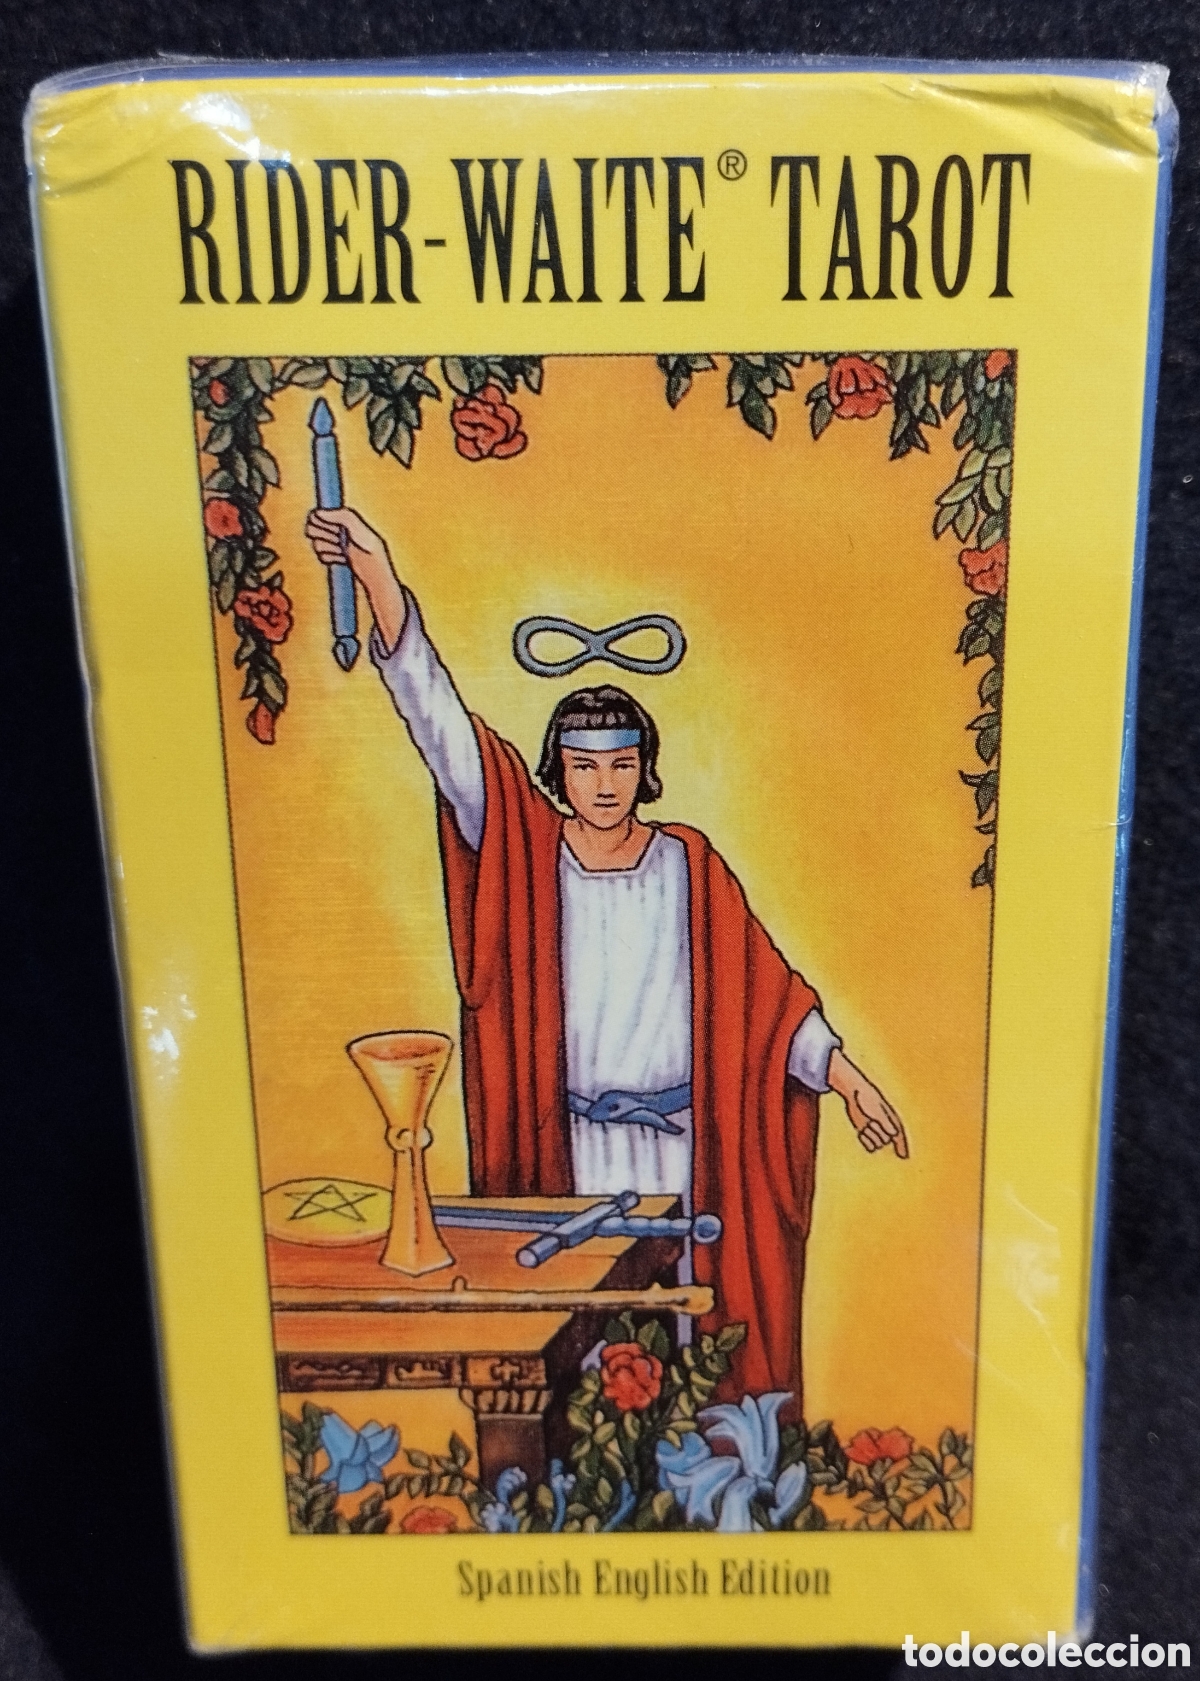 rider-waite tarot - spanish english edition - p - Compra venta en